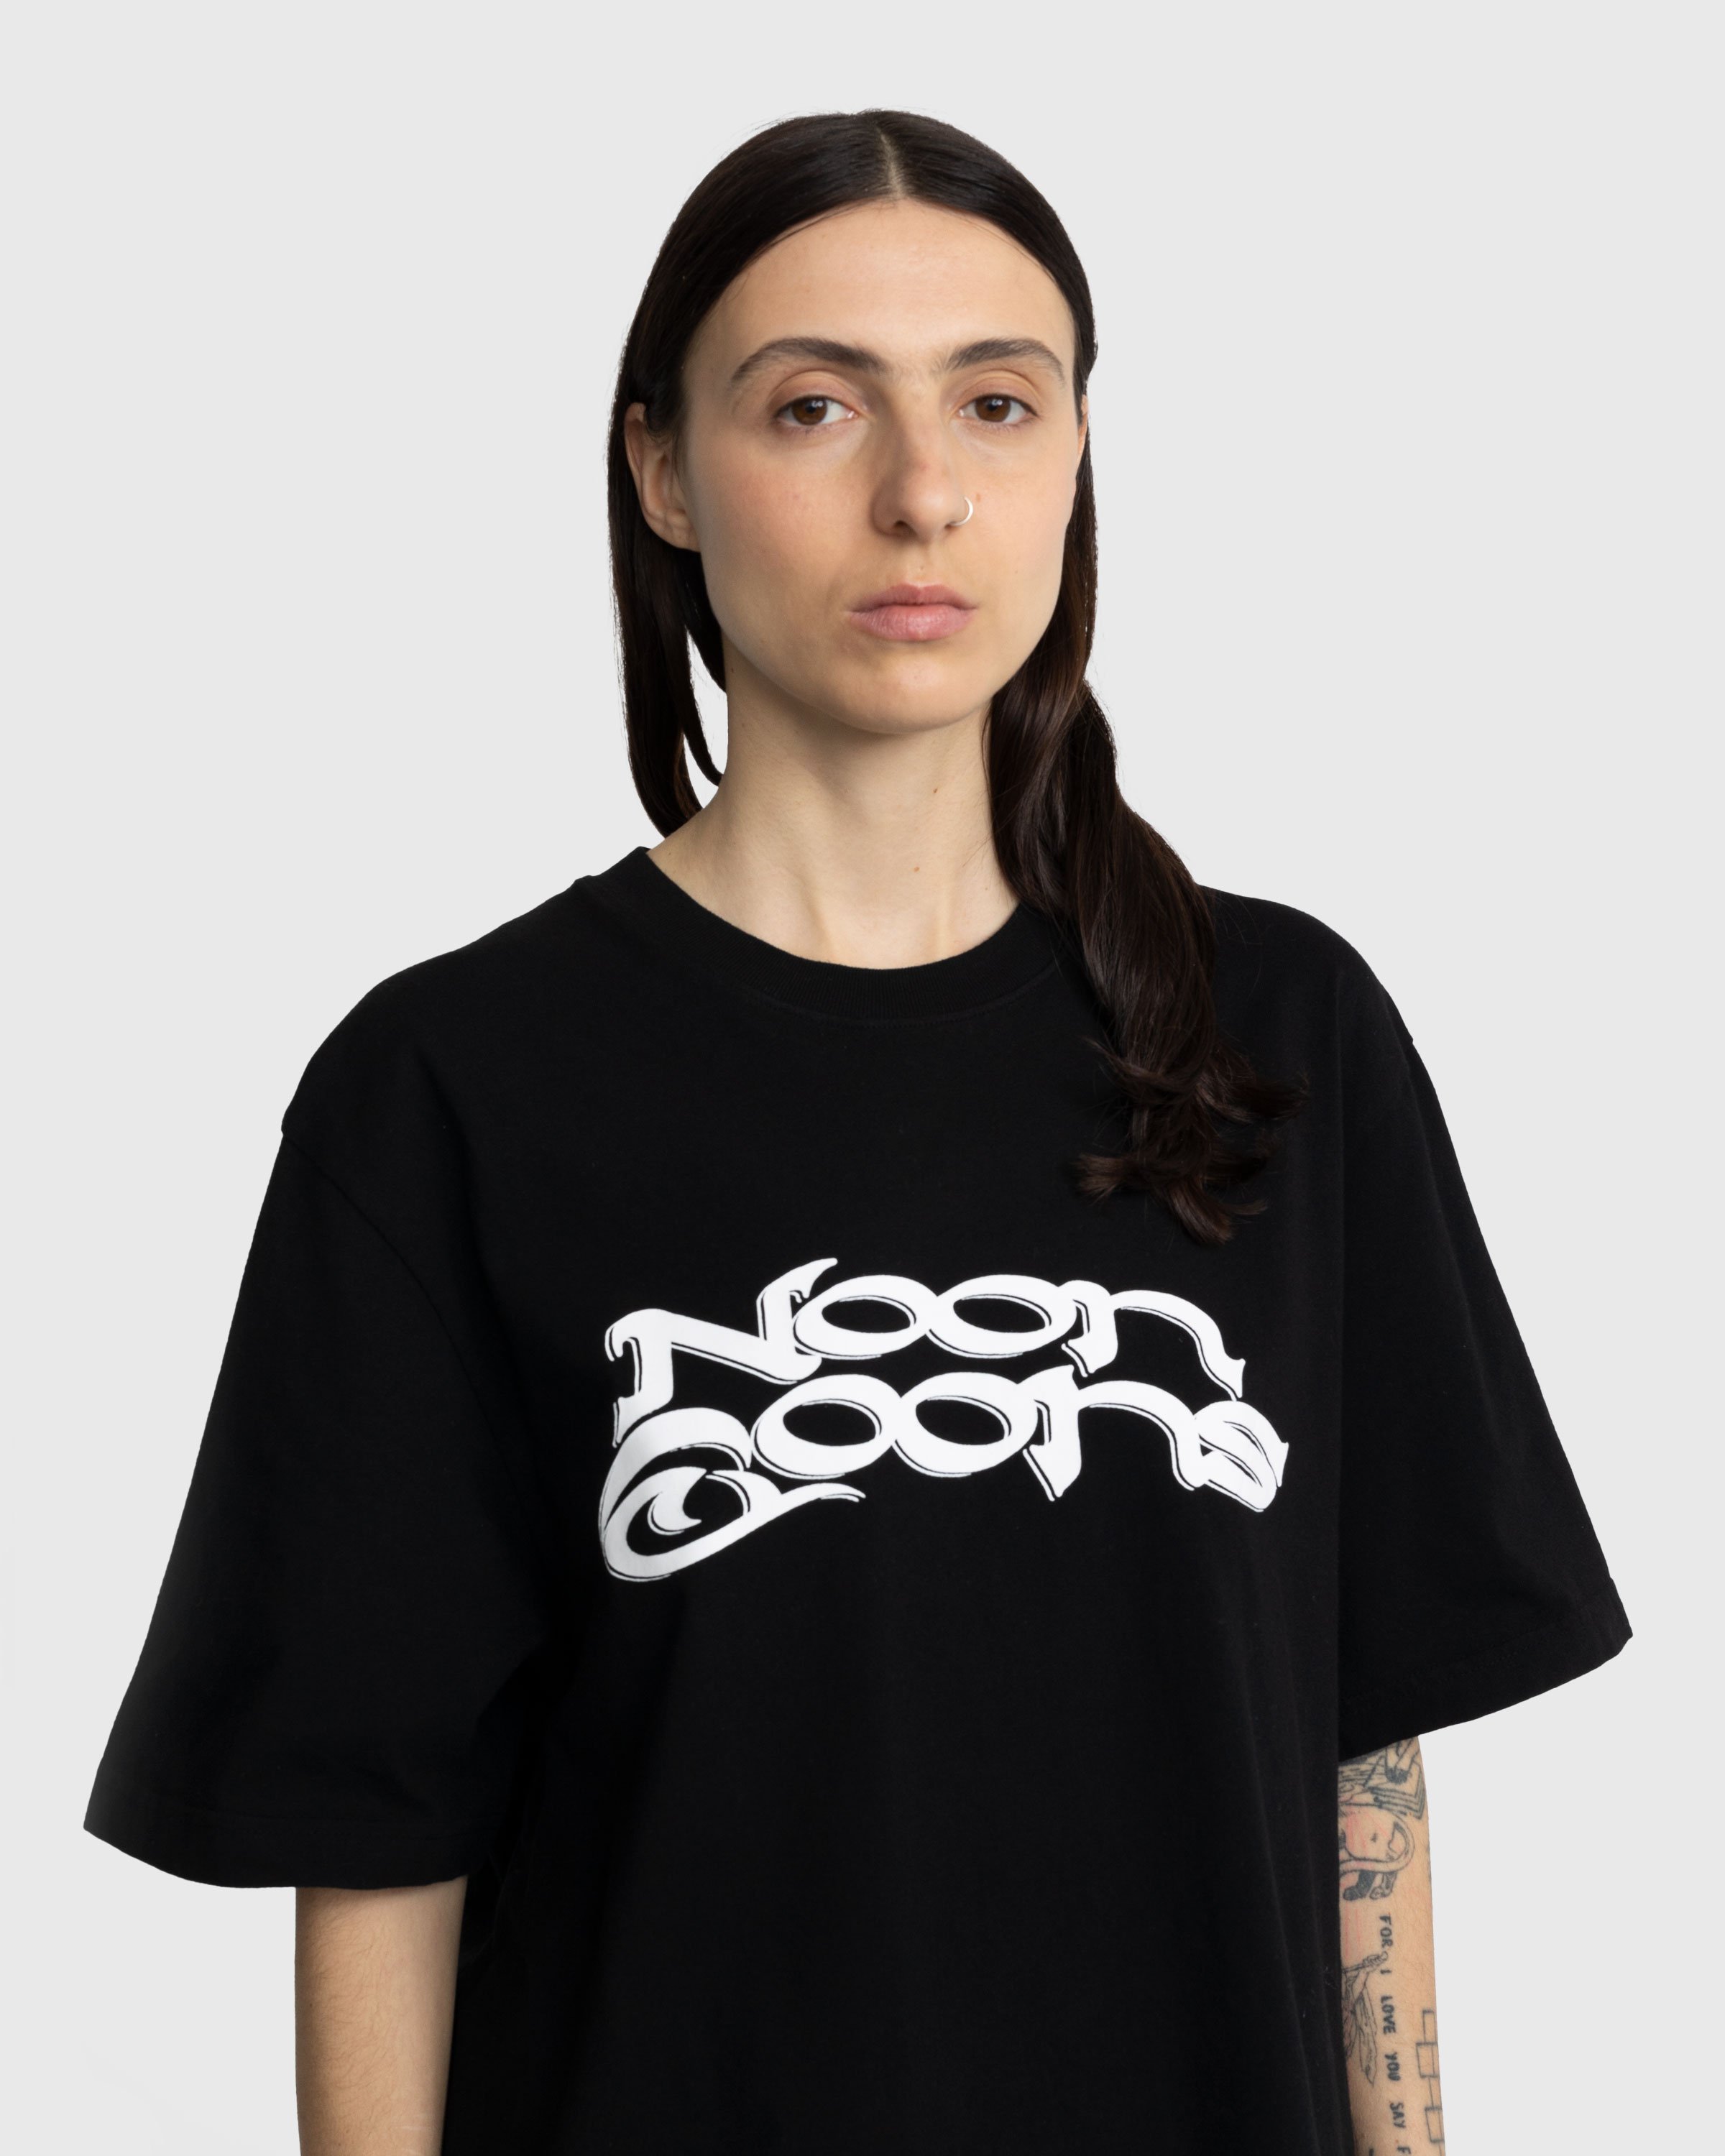 Noon Goons - Wave T-Shirt Black - Clothing - Black - Image 5